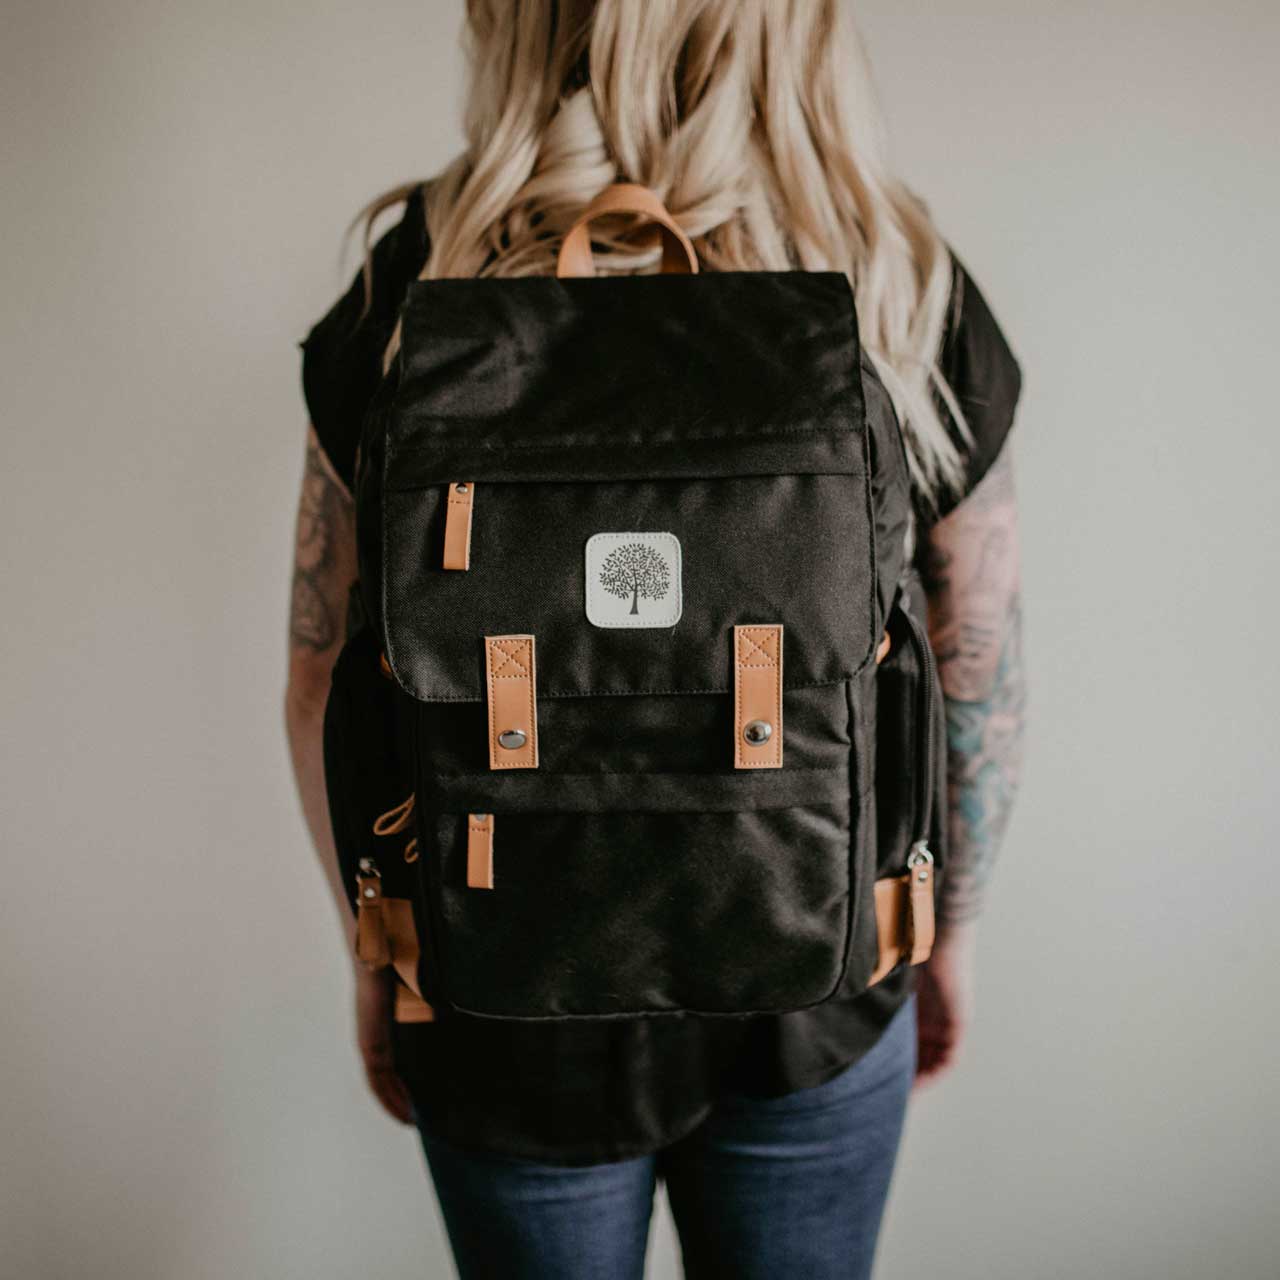 Birch Bag Diaper Bag Backpack - Black